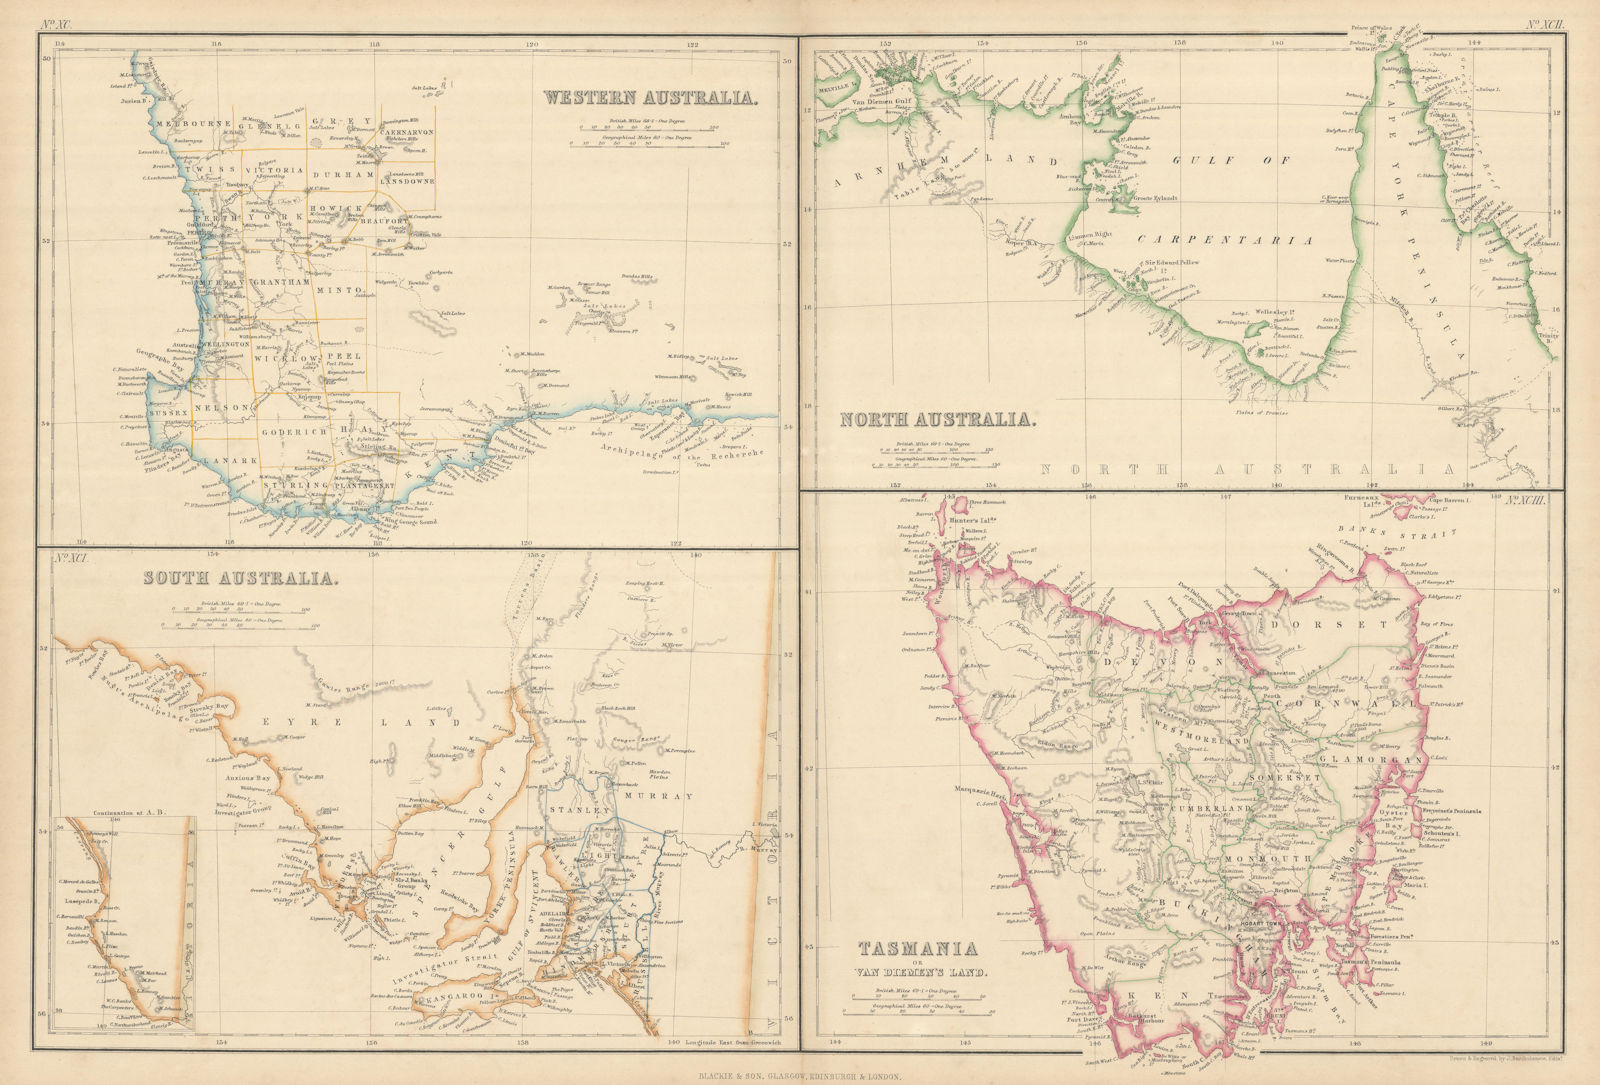 Western, South, North Australia. Tasmania Van Diemen's Land BARTHOLOMEW 1860 map